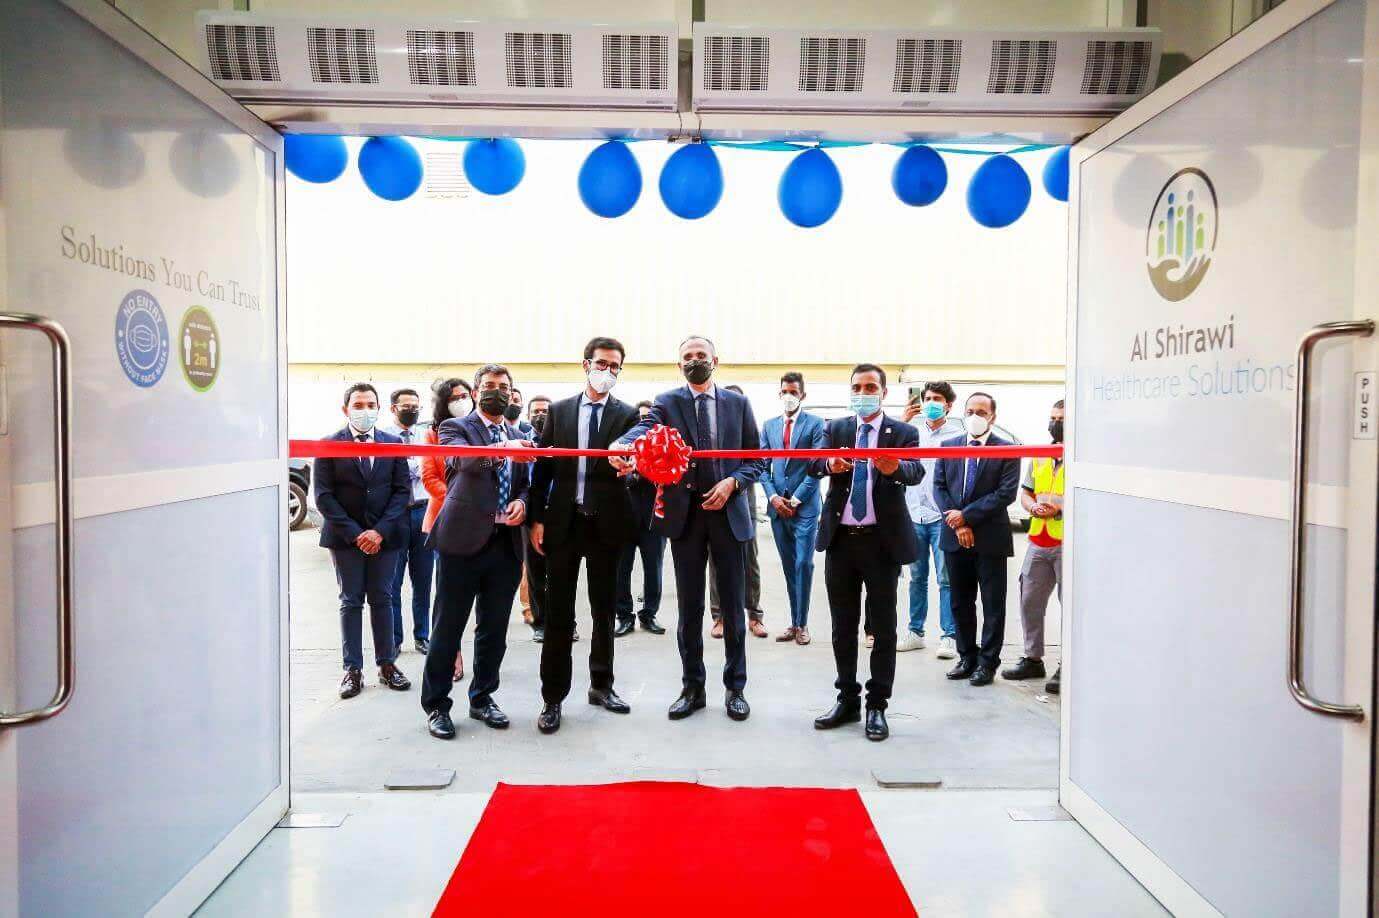 Al Shirawi Healthcare Solutions Inaugurates Its New Facility in Dubai